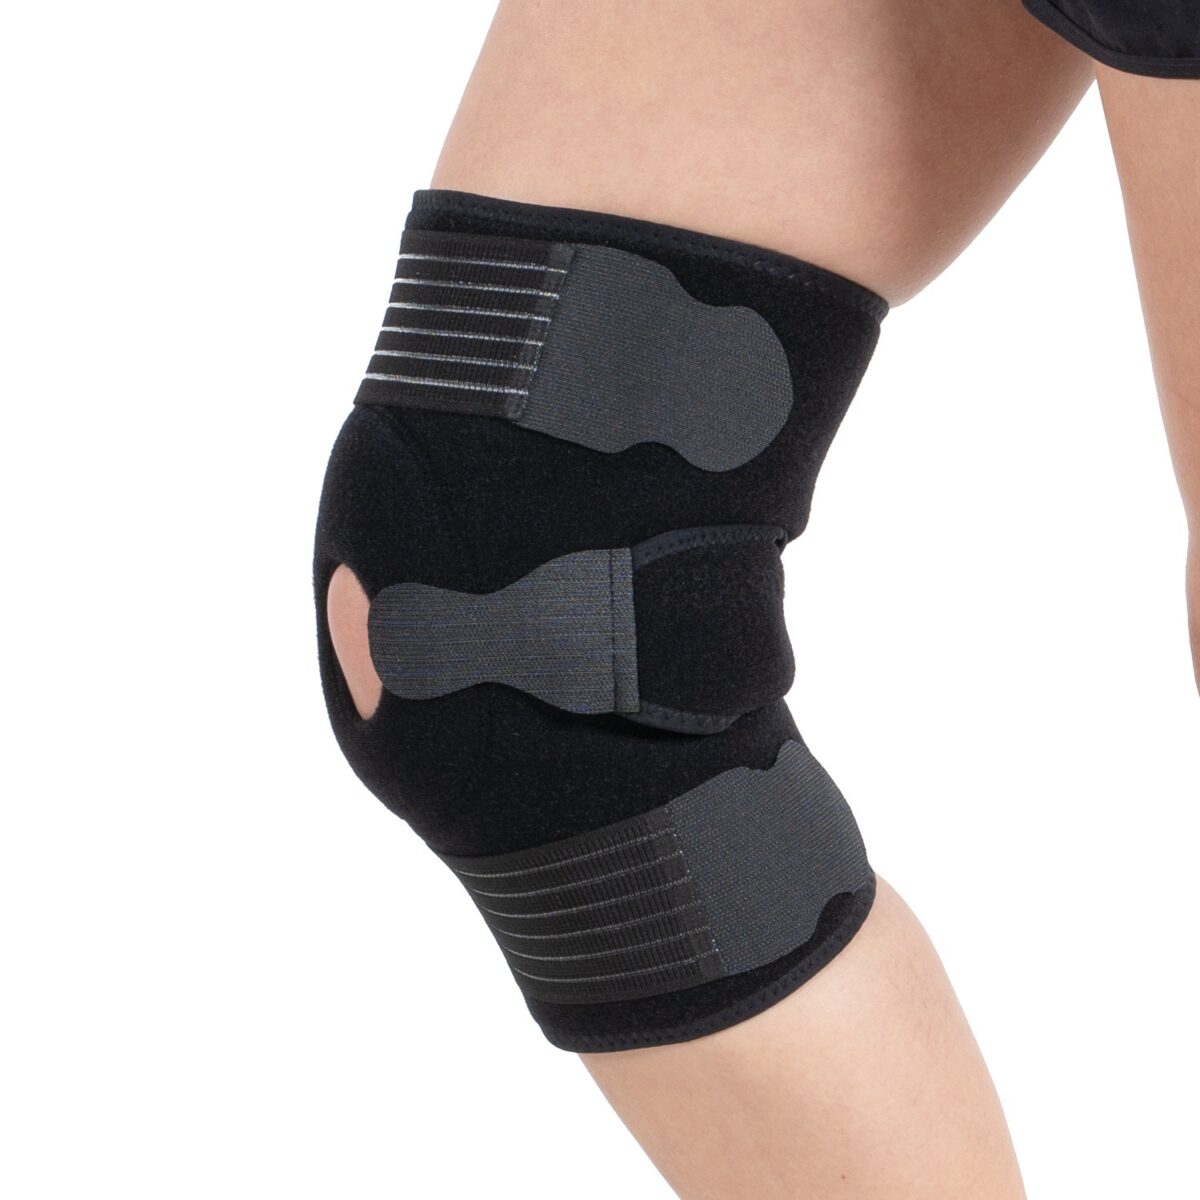 wingmed orthopedic equipments W504 patella knee support 10